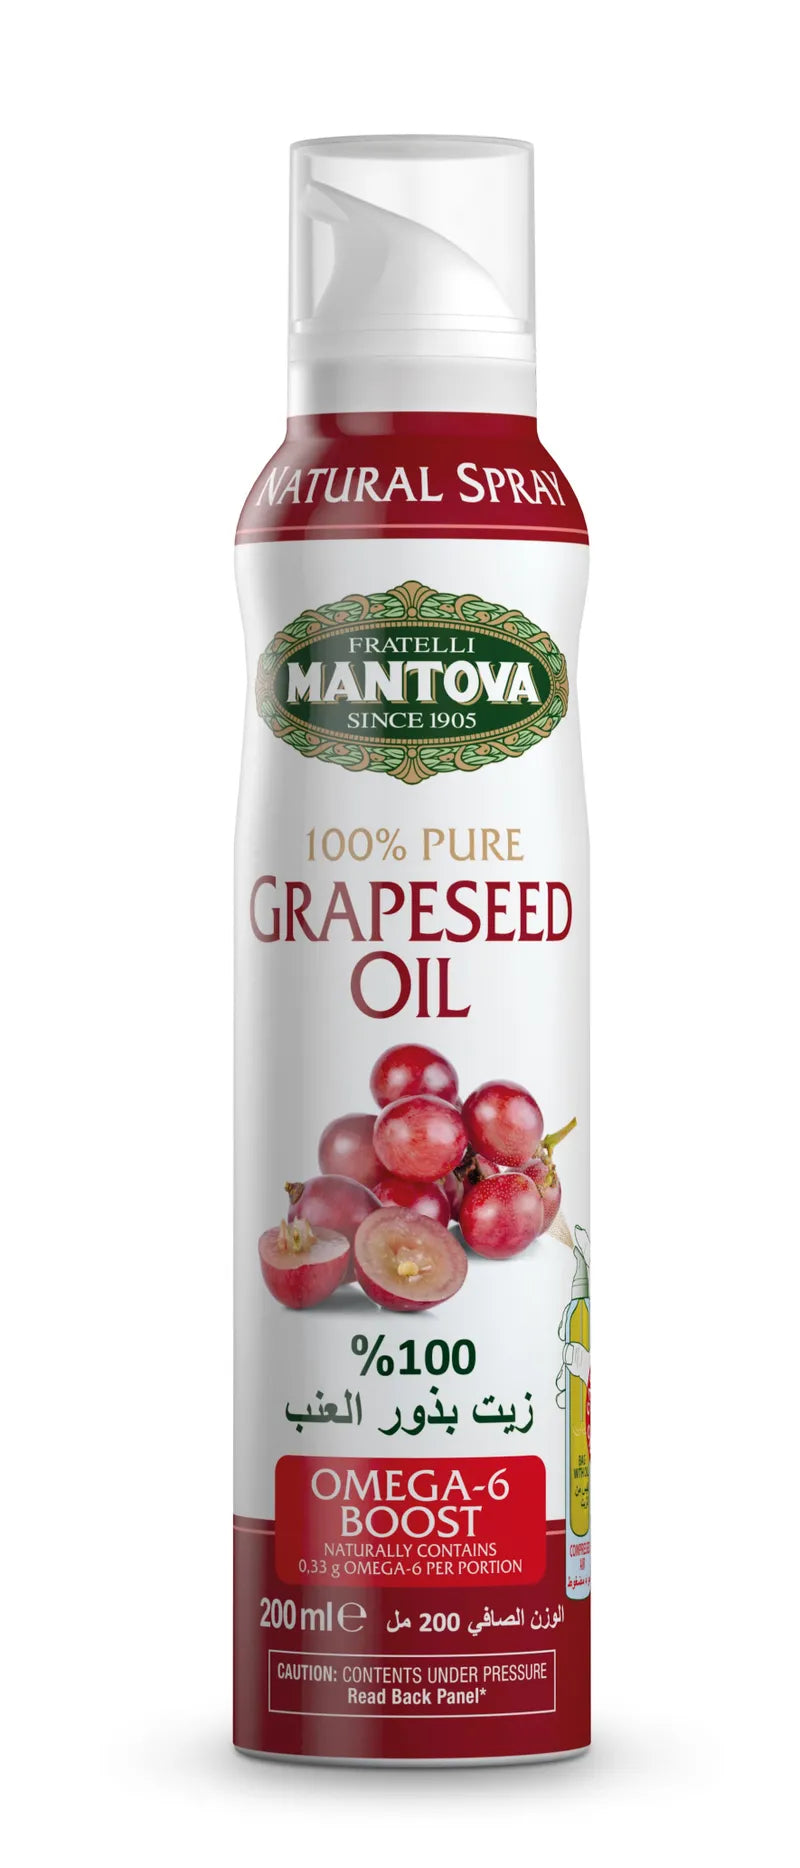 MANTOVA Non-GMO Ghee Butter Spray, 200ml Online